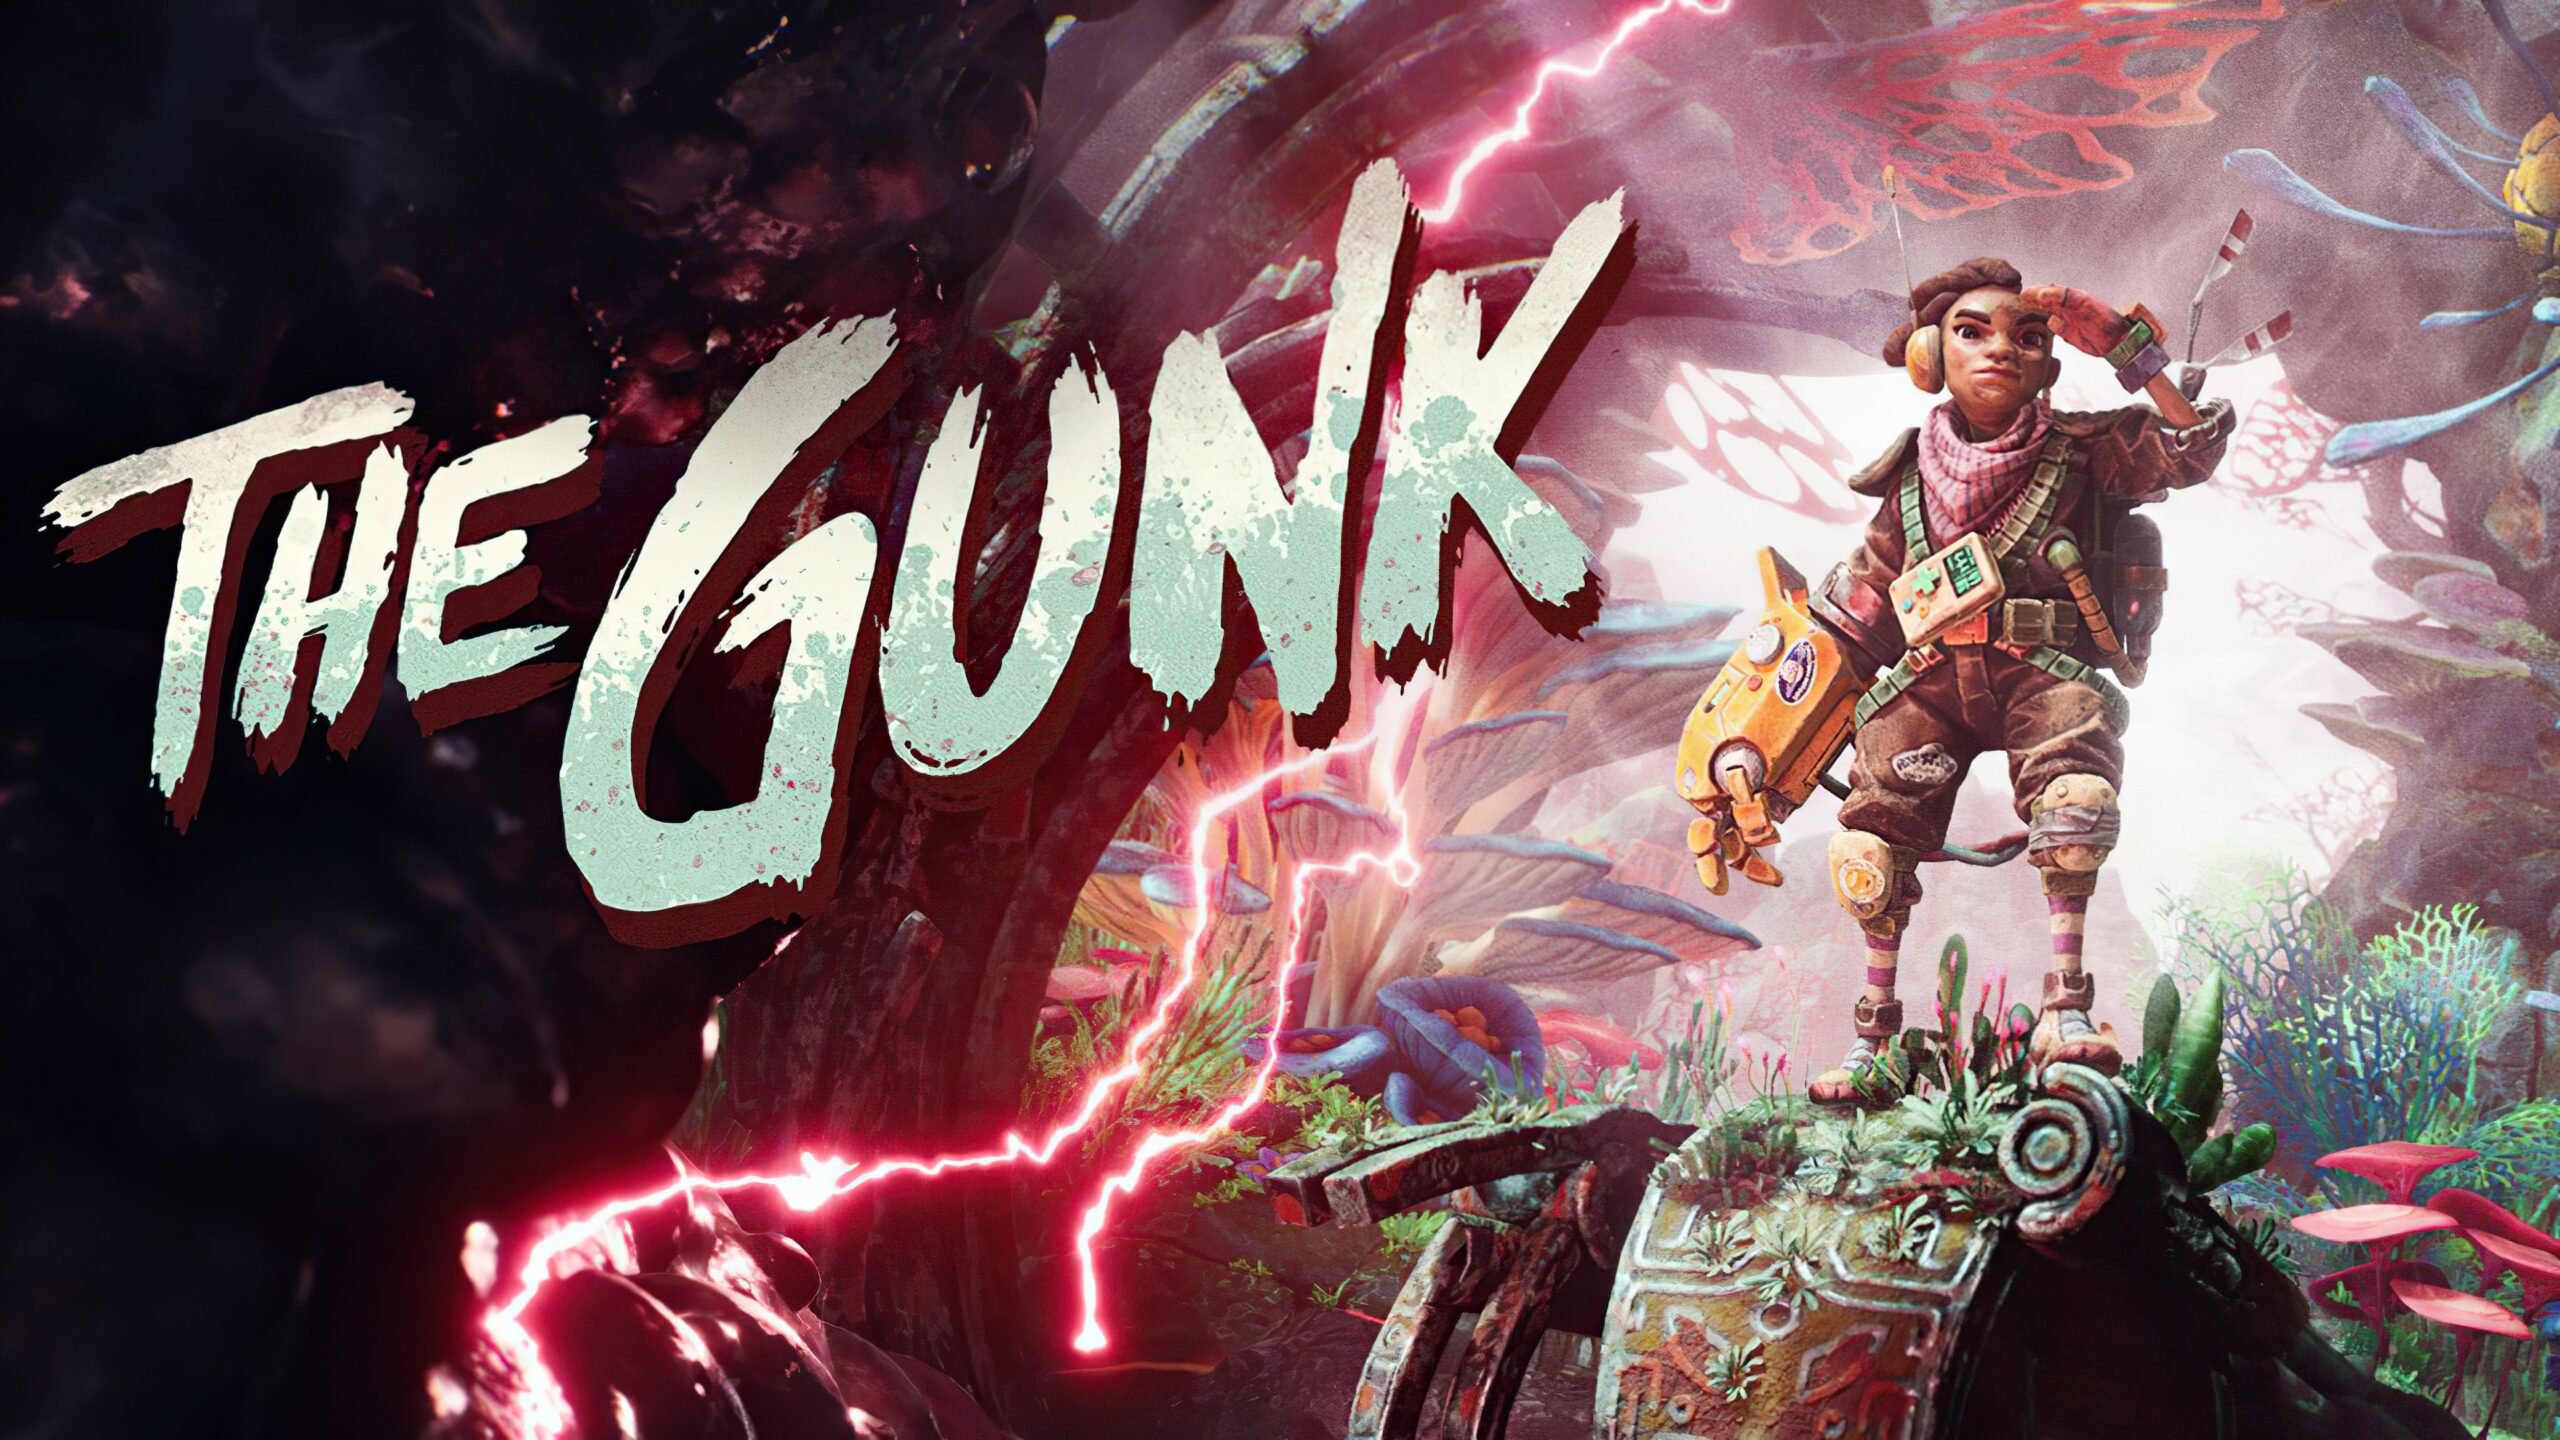 The Gunk Gaming Wallpapers